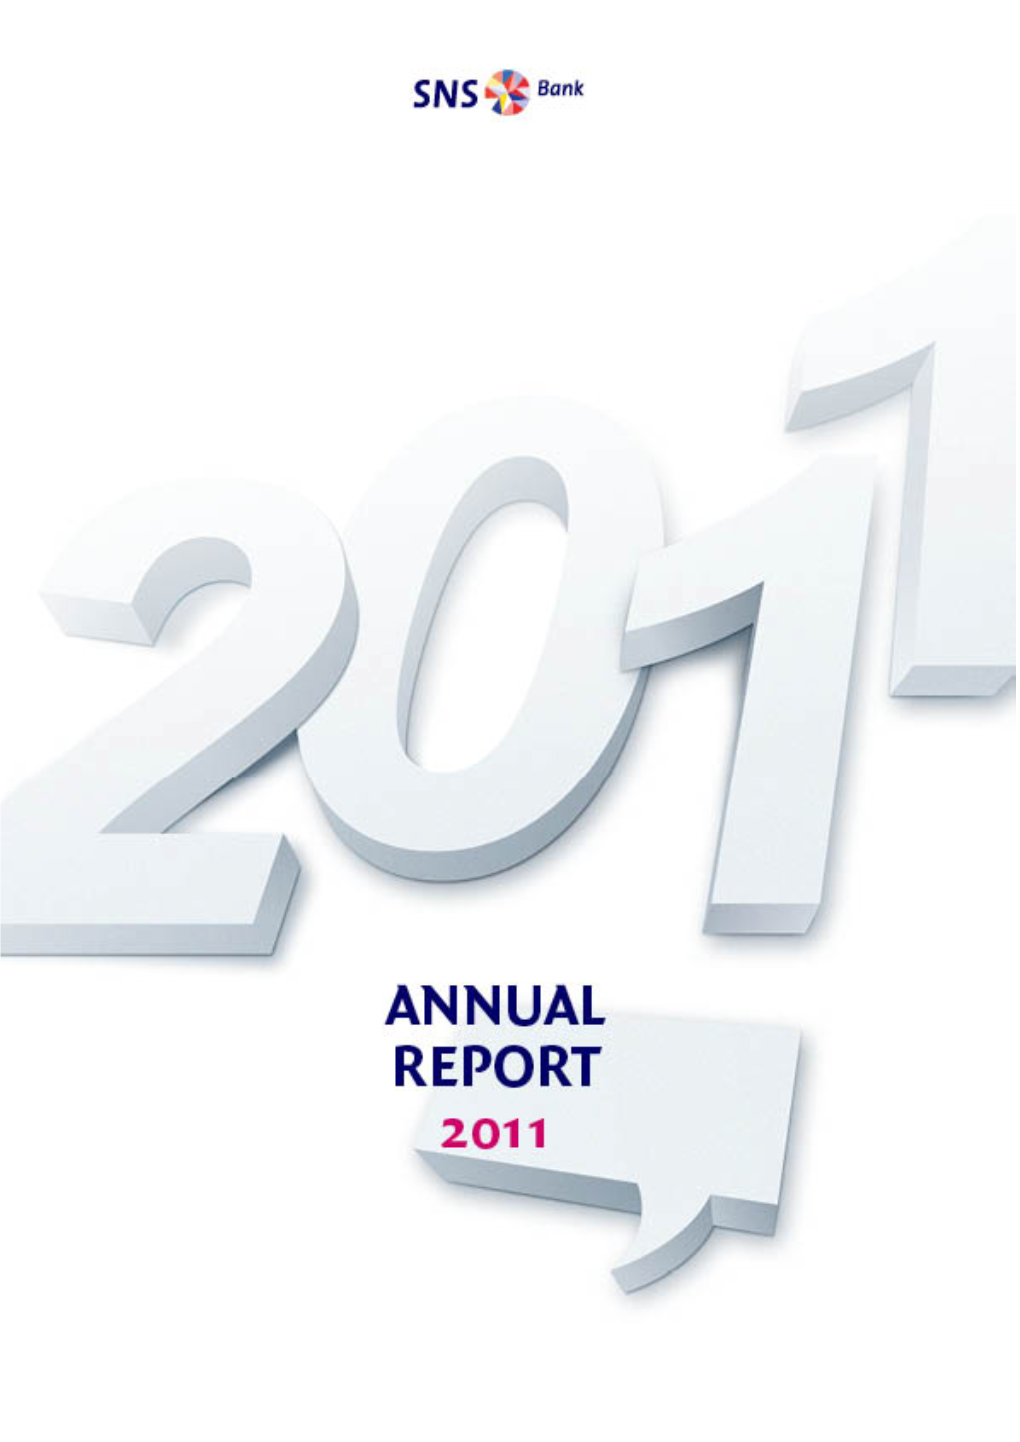 Annual Report SNS Bank 2011.Pdf